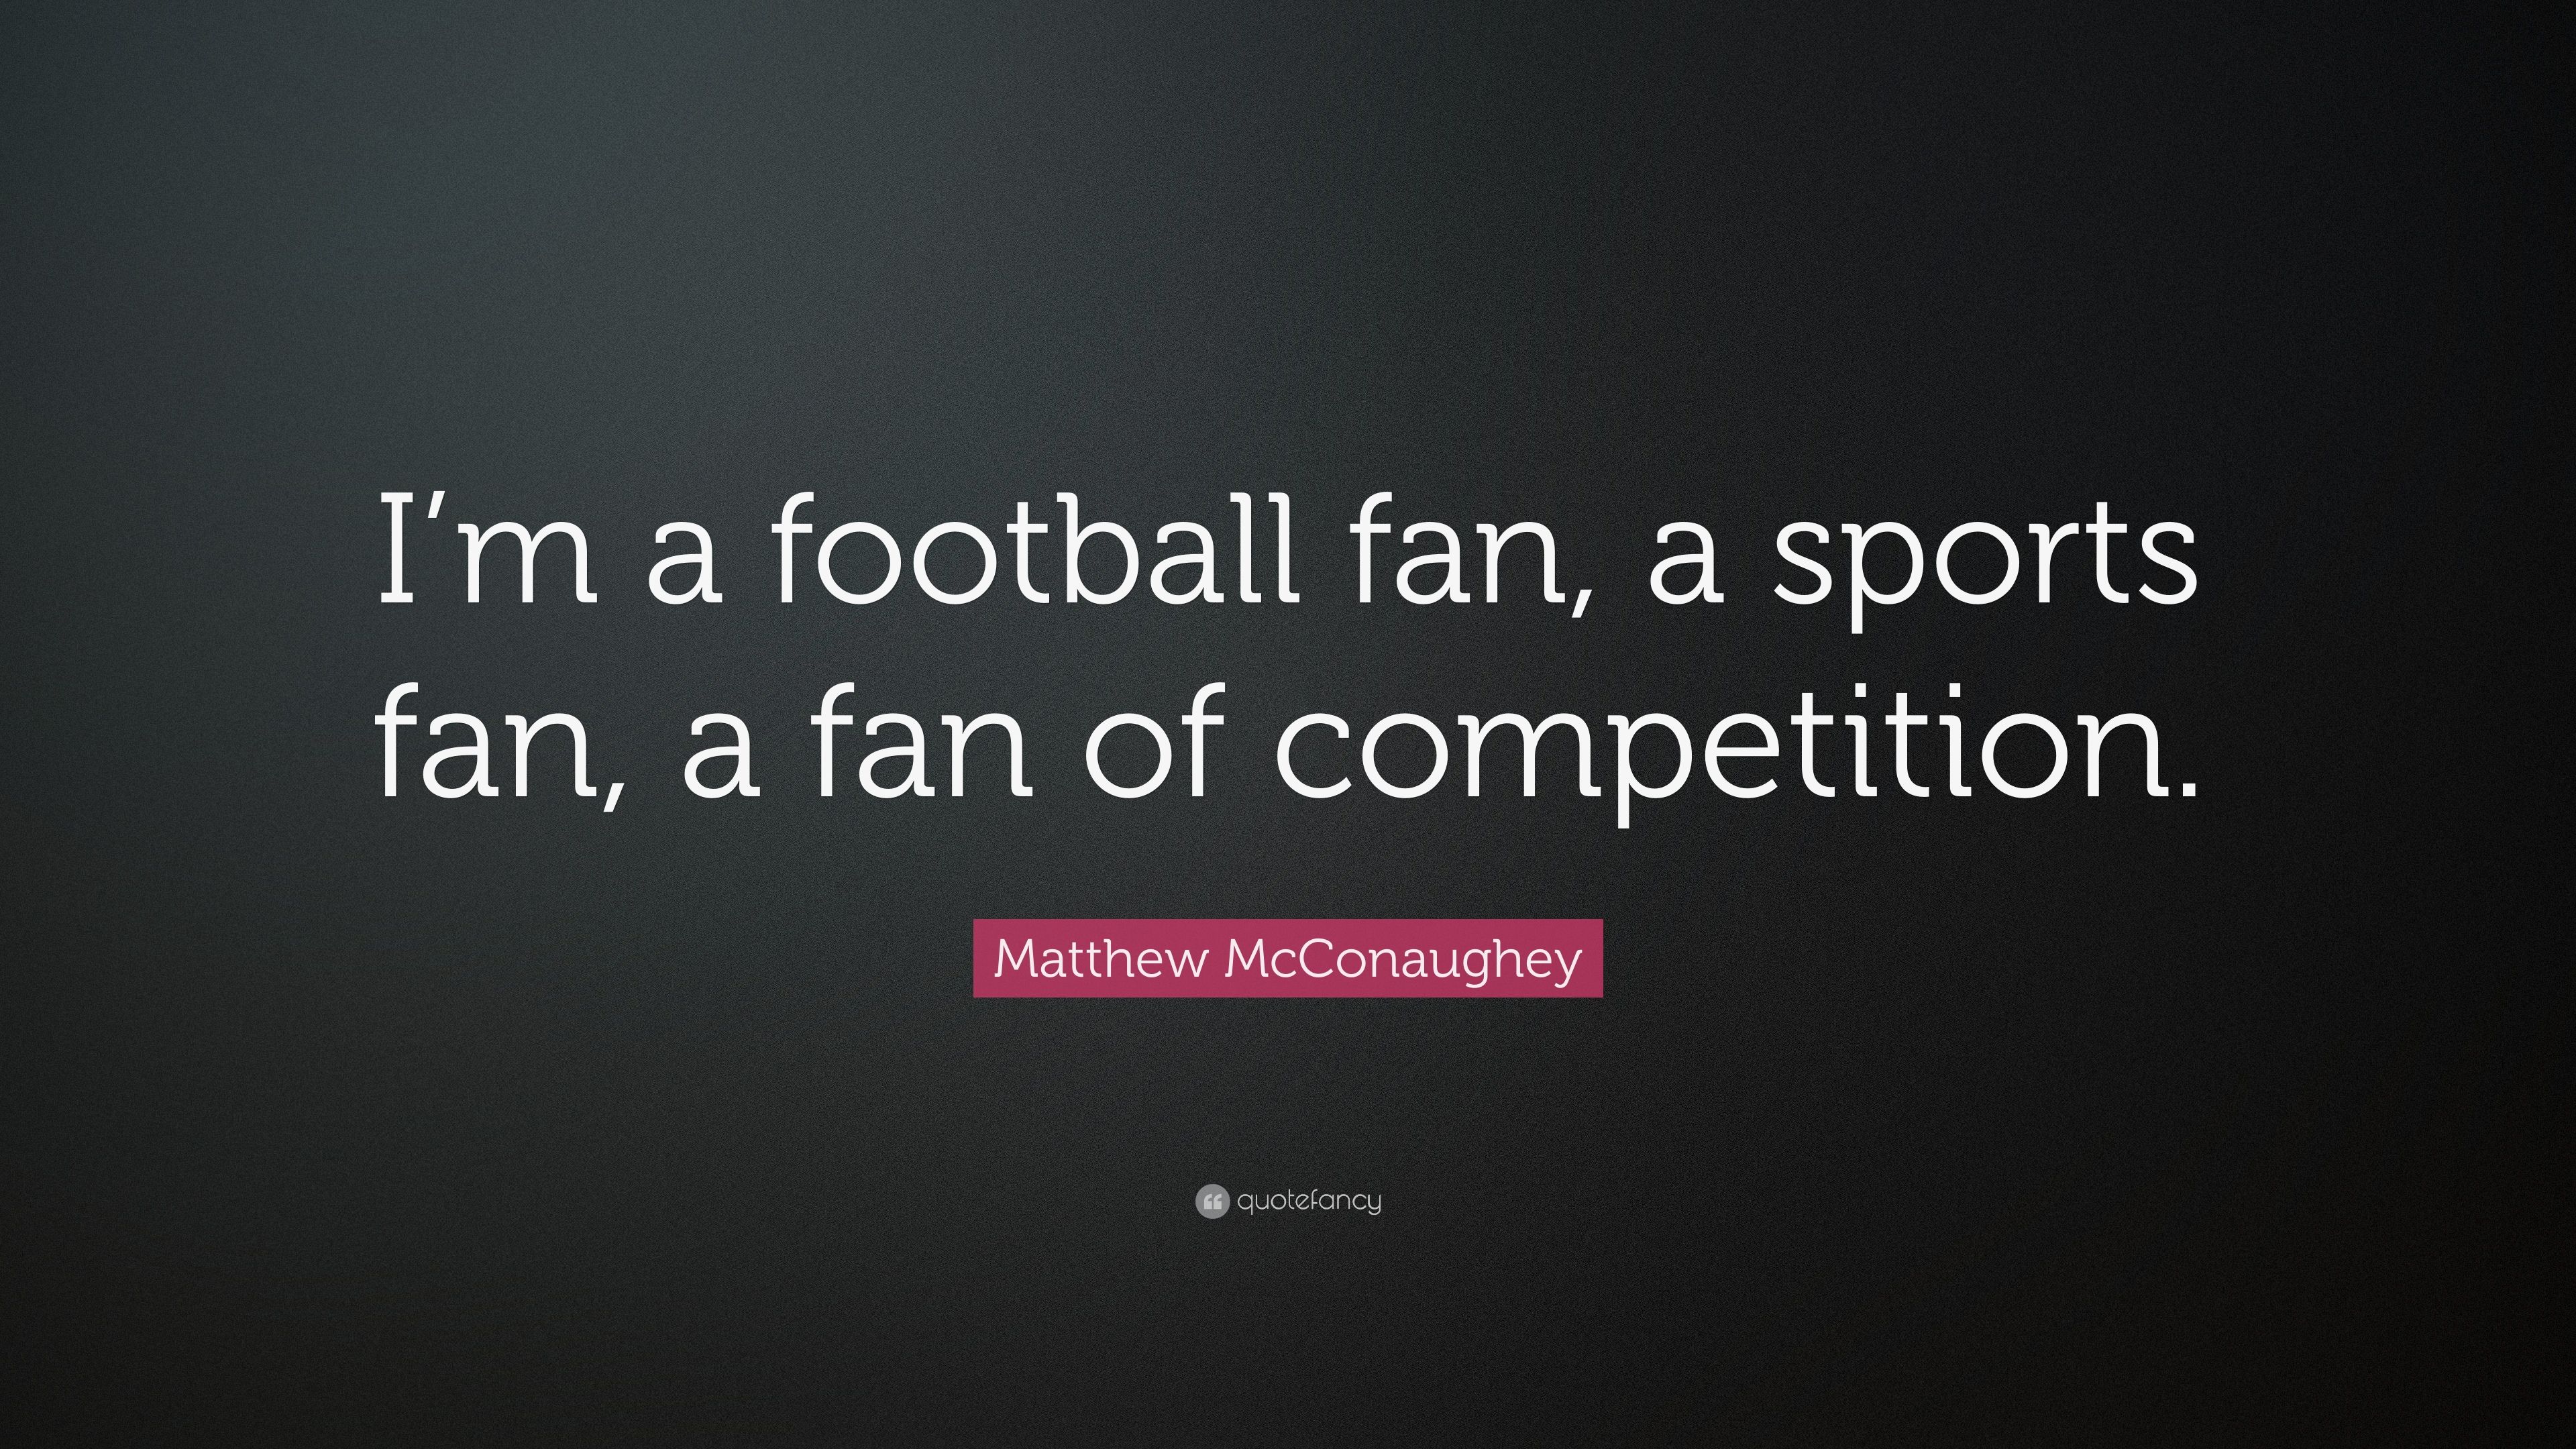 Matthew McConaughey Quote: “I'm a football fan, a sports fan, a fan of competition.” (7 wallpaper)